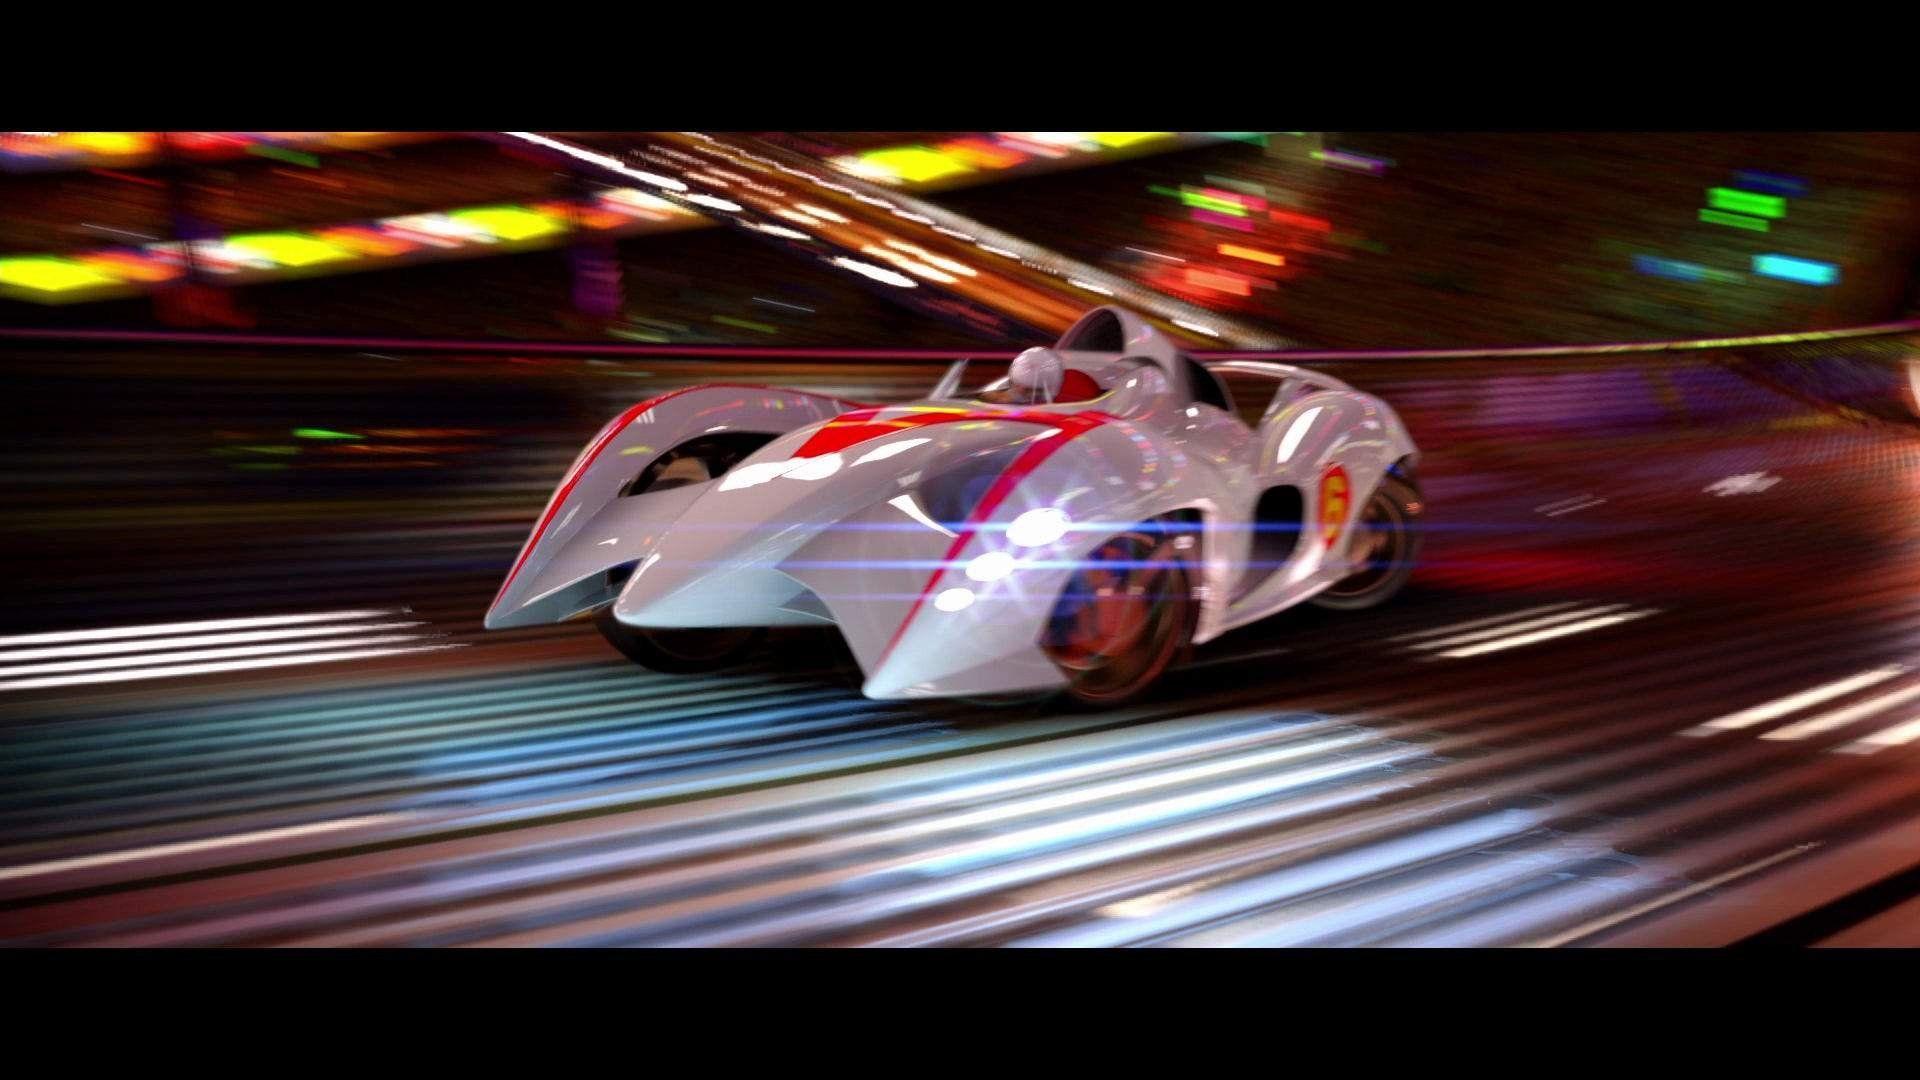 Speed Racer Wallpaper, HDQ Beautiful Speed Racer Image